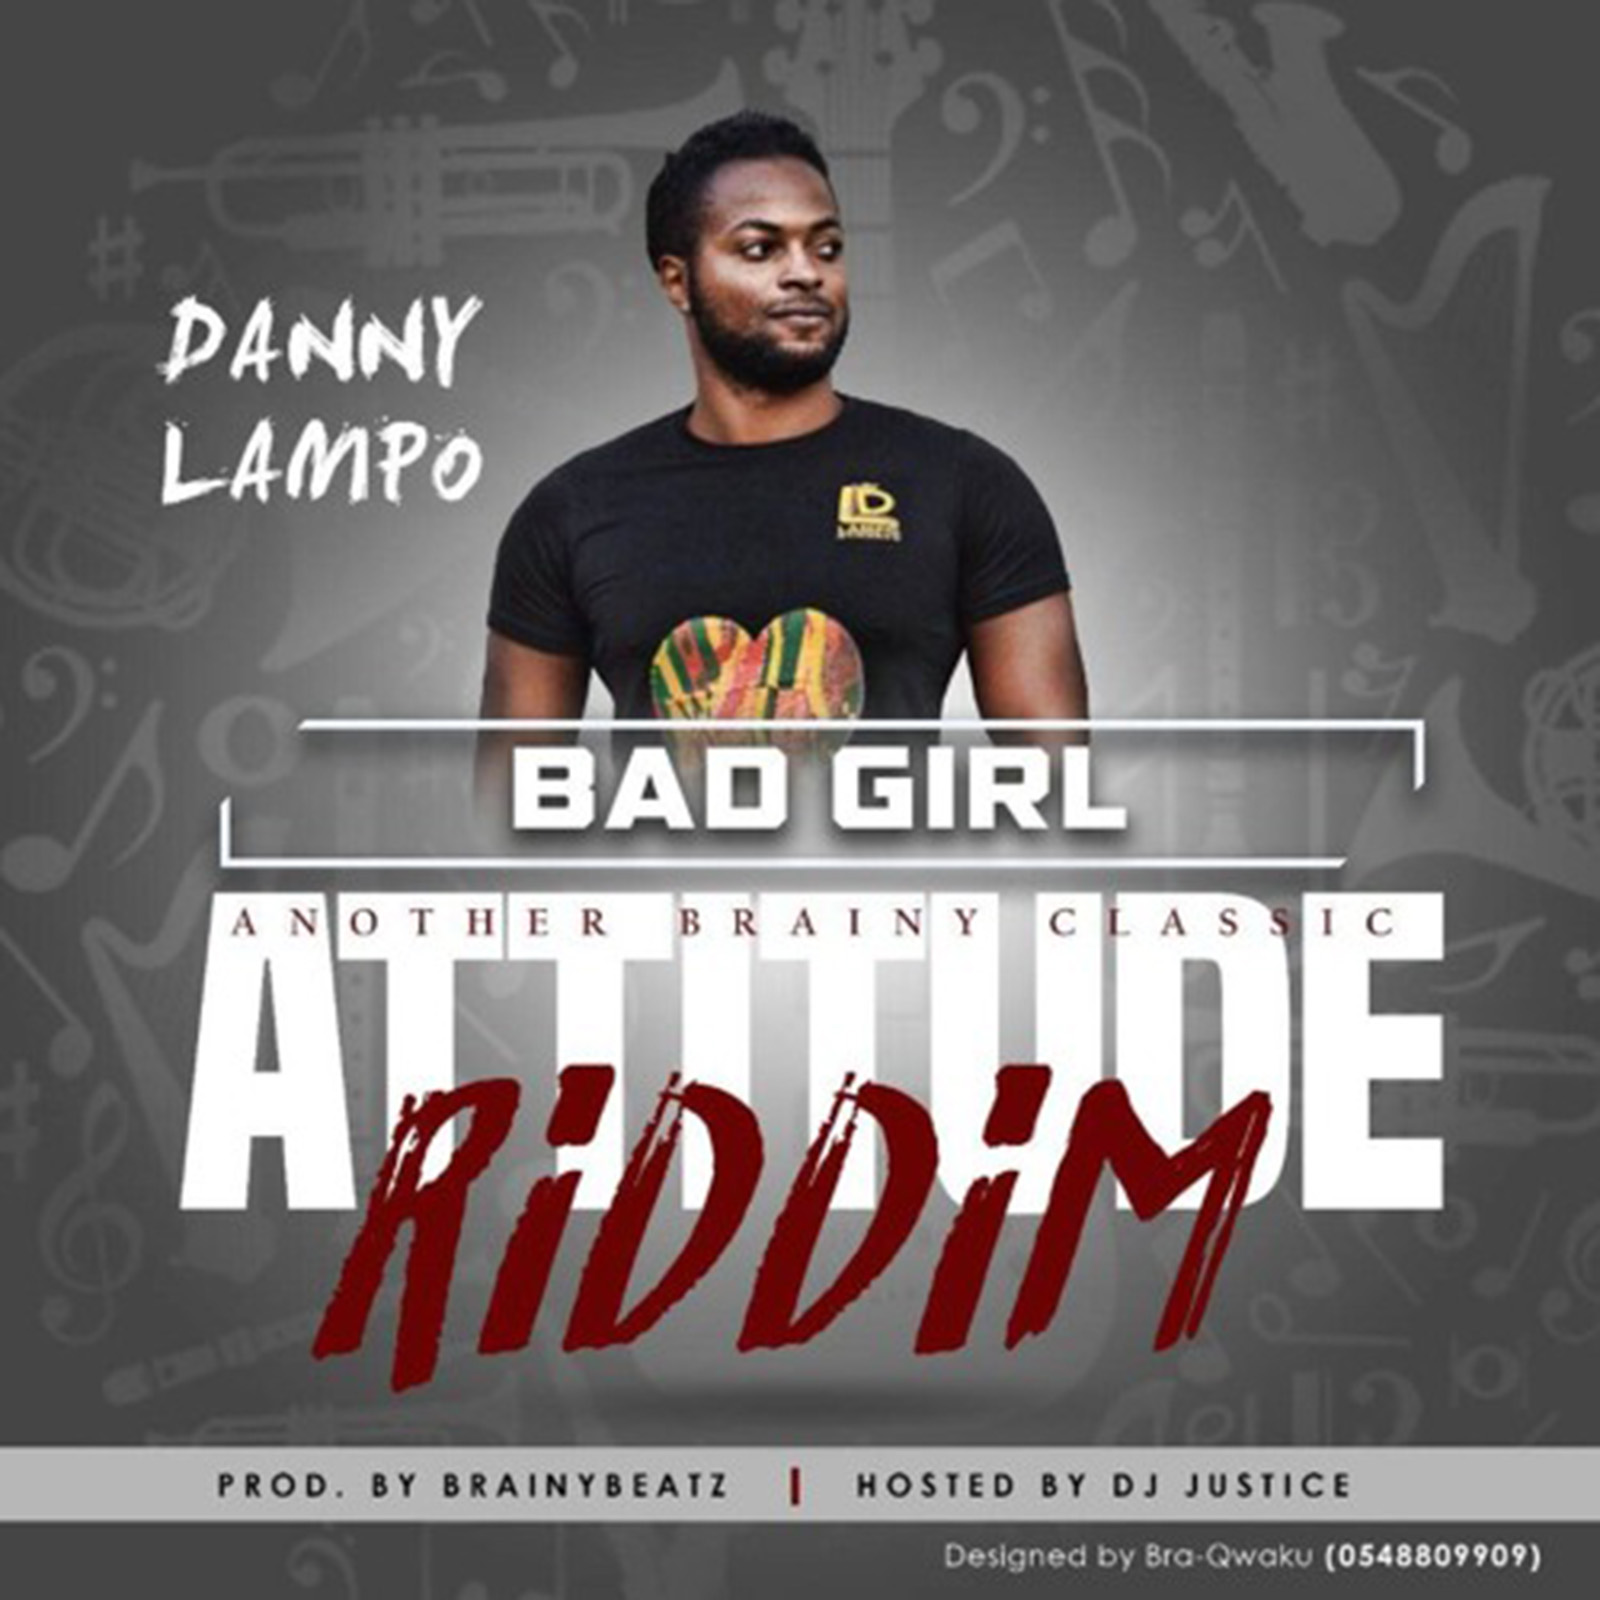 Bad Girl (Attitude Riddim) by Danny Lampo